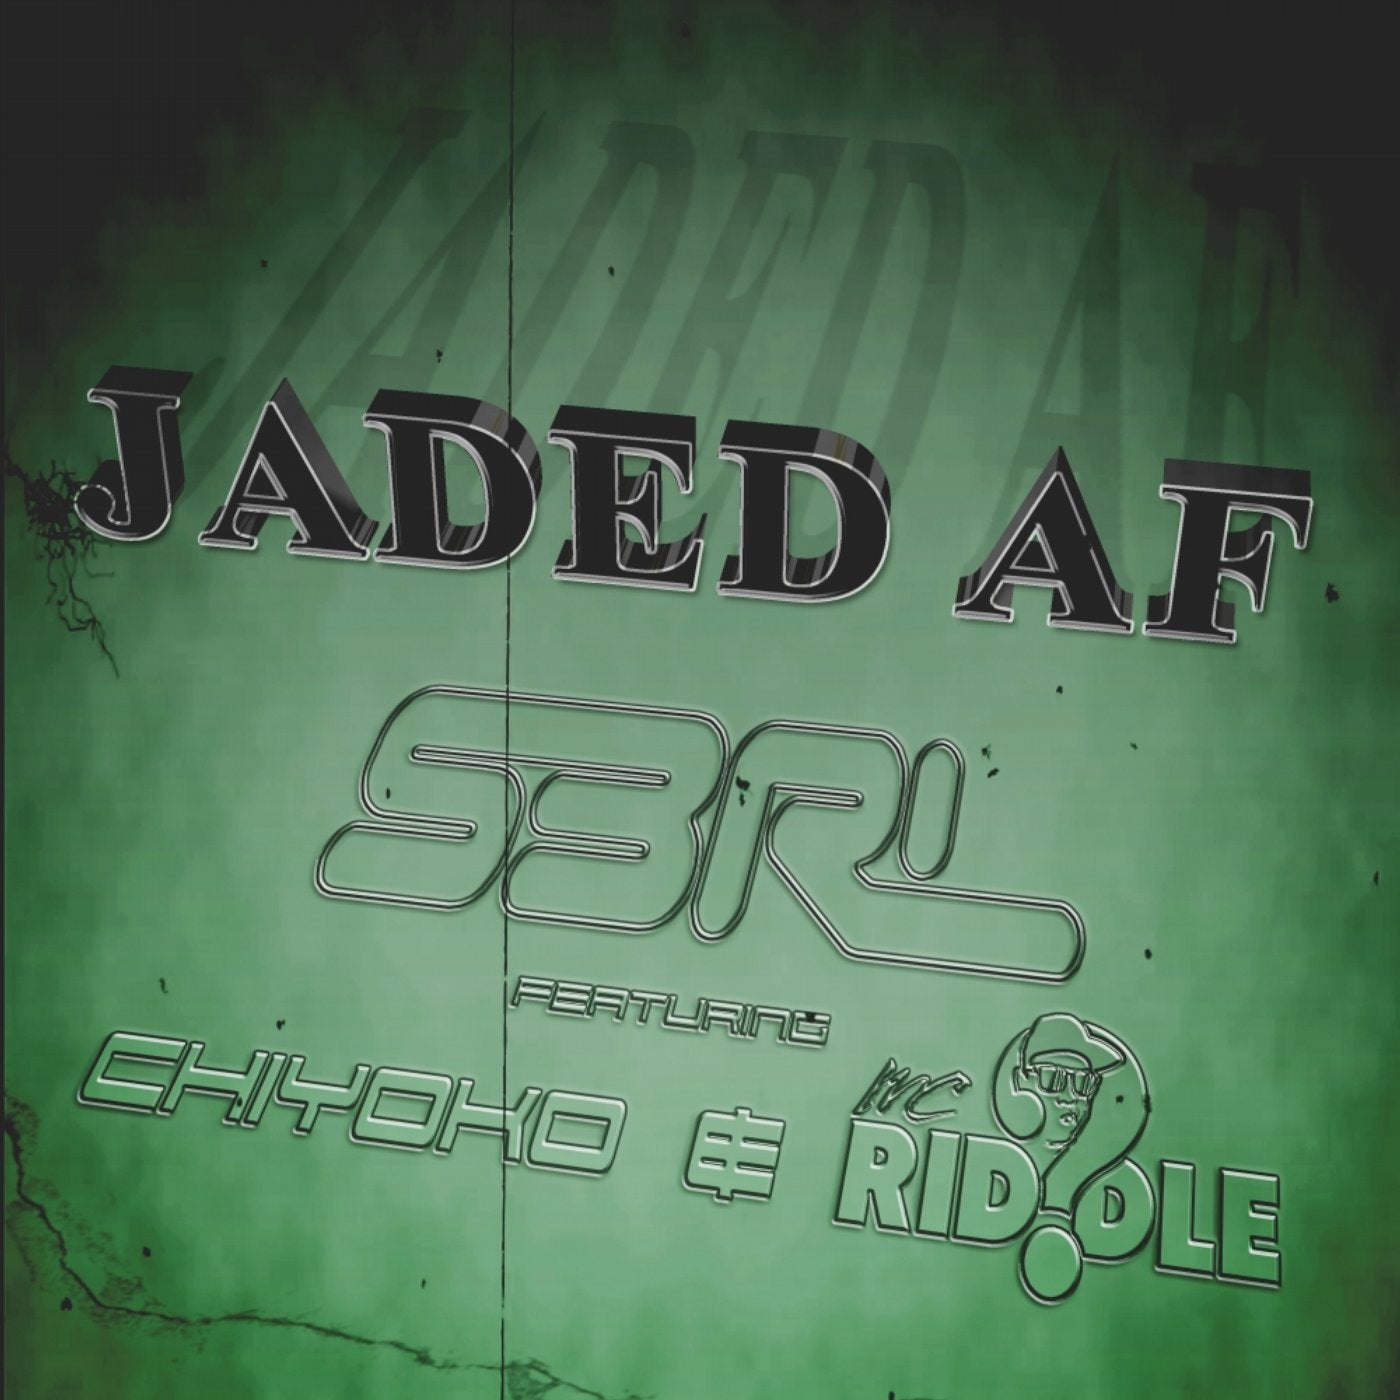 Jaded AF (DJ Edit)